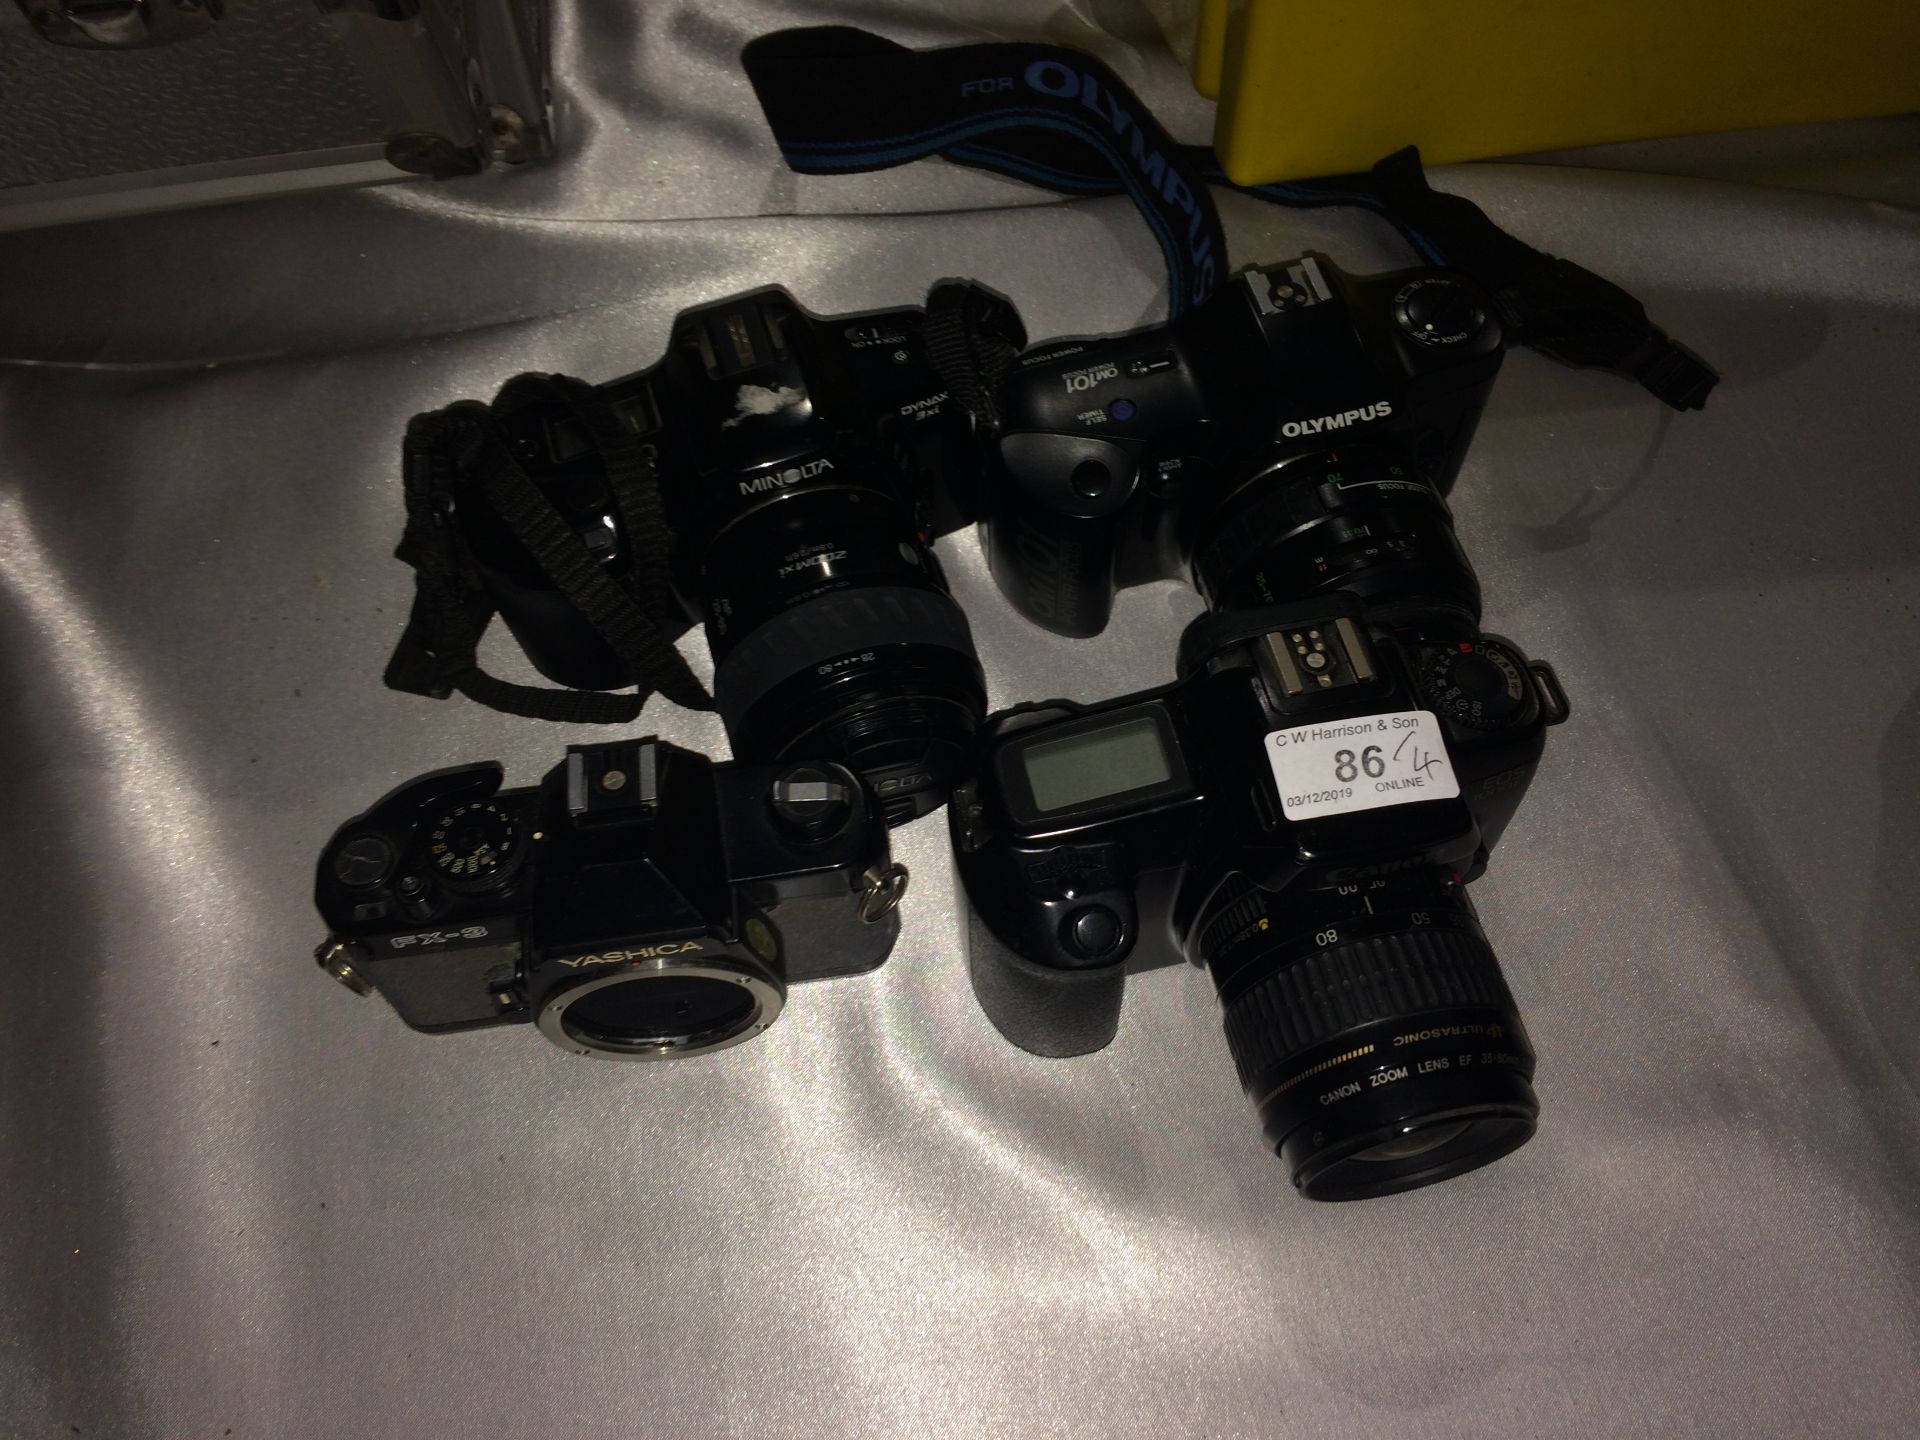 4 x items - Olympus OM101 camera, Yashica FX-3 camera,